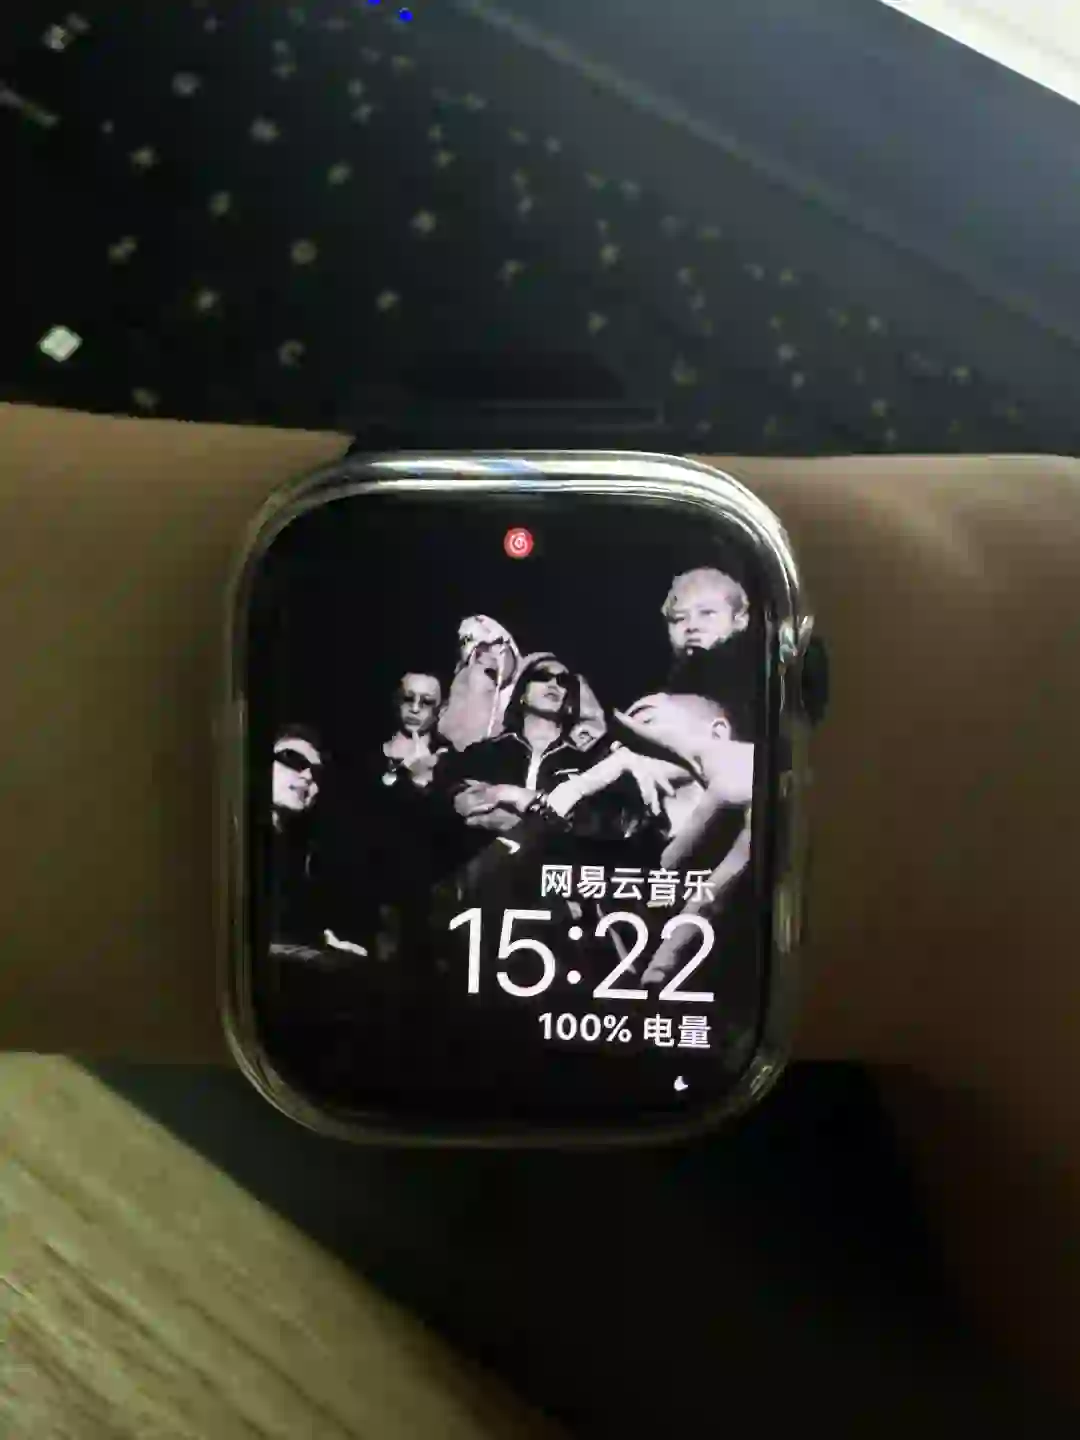 Apple watch 必下app！